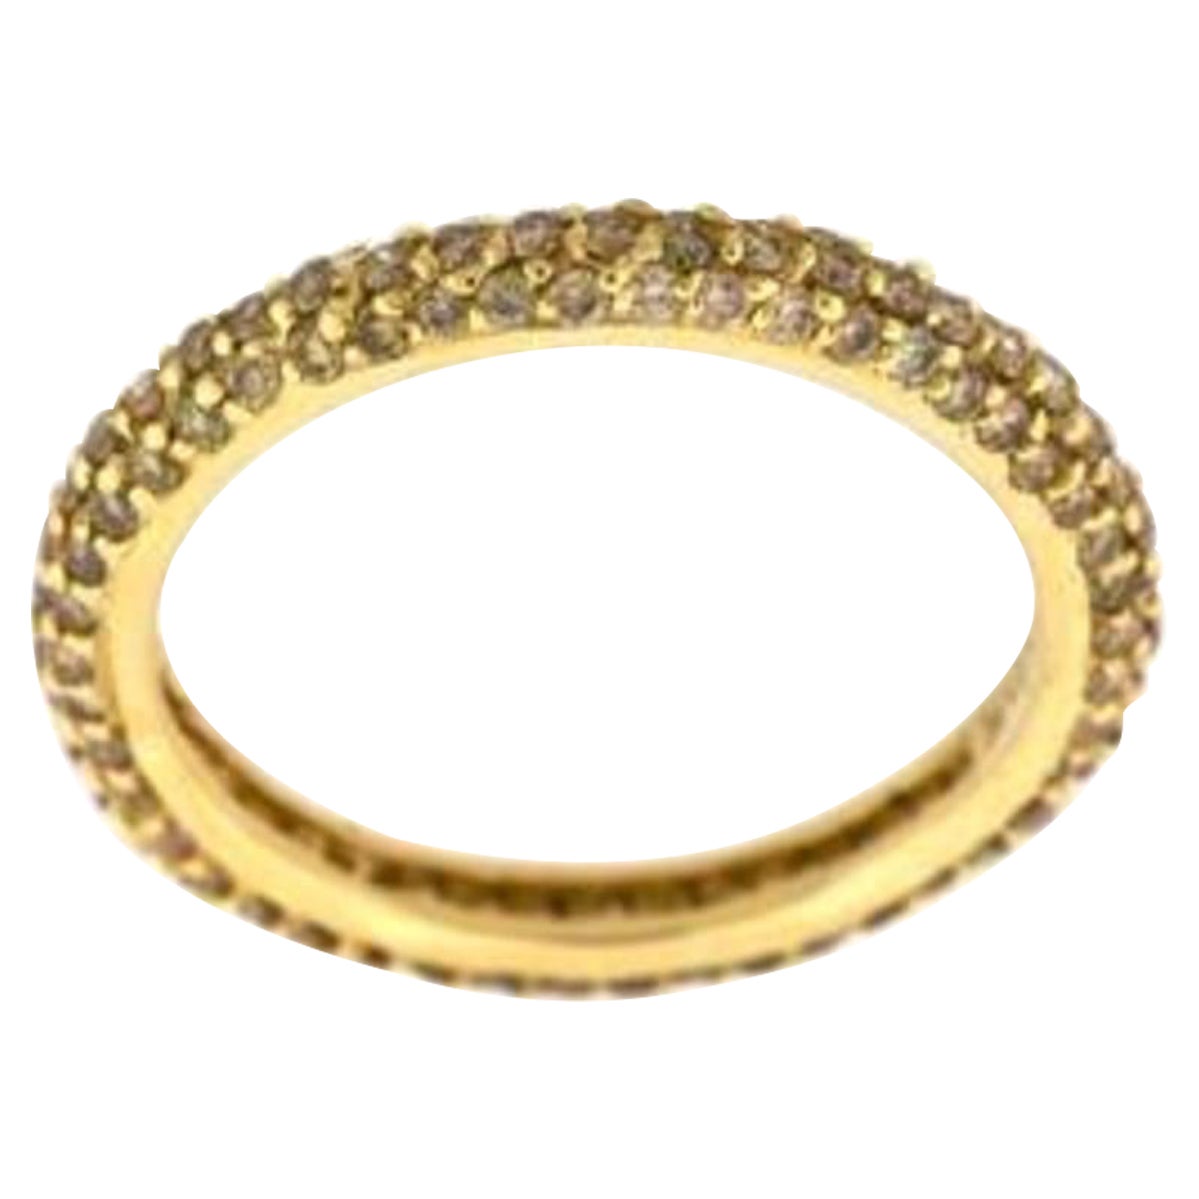 Le Vian Ring Featuring 1 Cts. Vanilla Diamonds Set in 14k Vanilla Gold